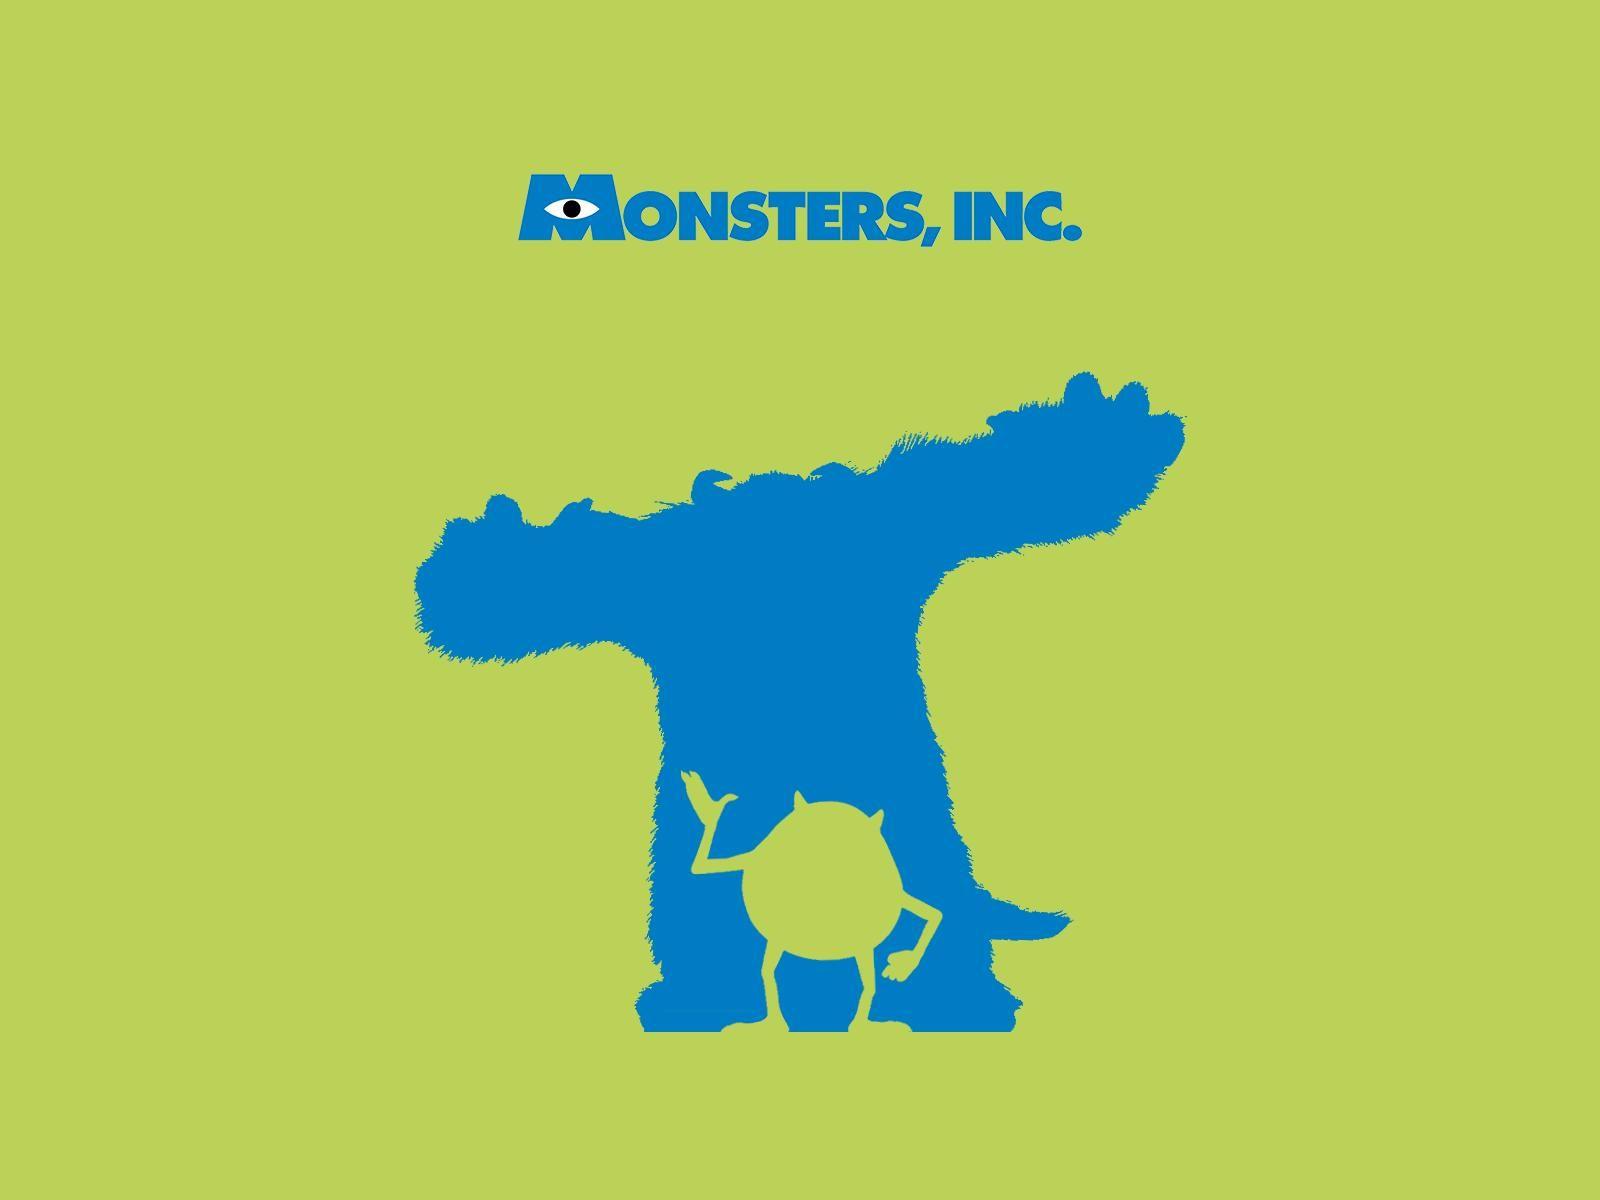 Monsters, Inc Wallpaper HD Download